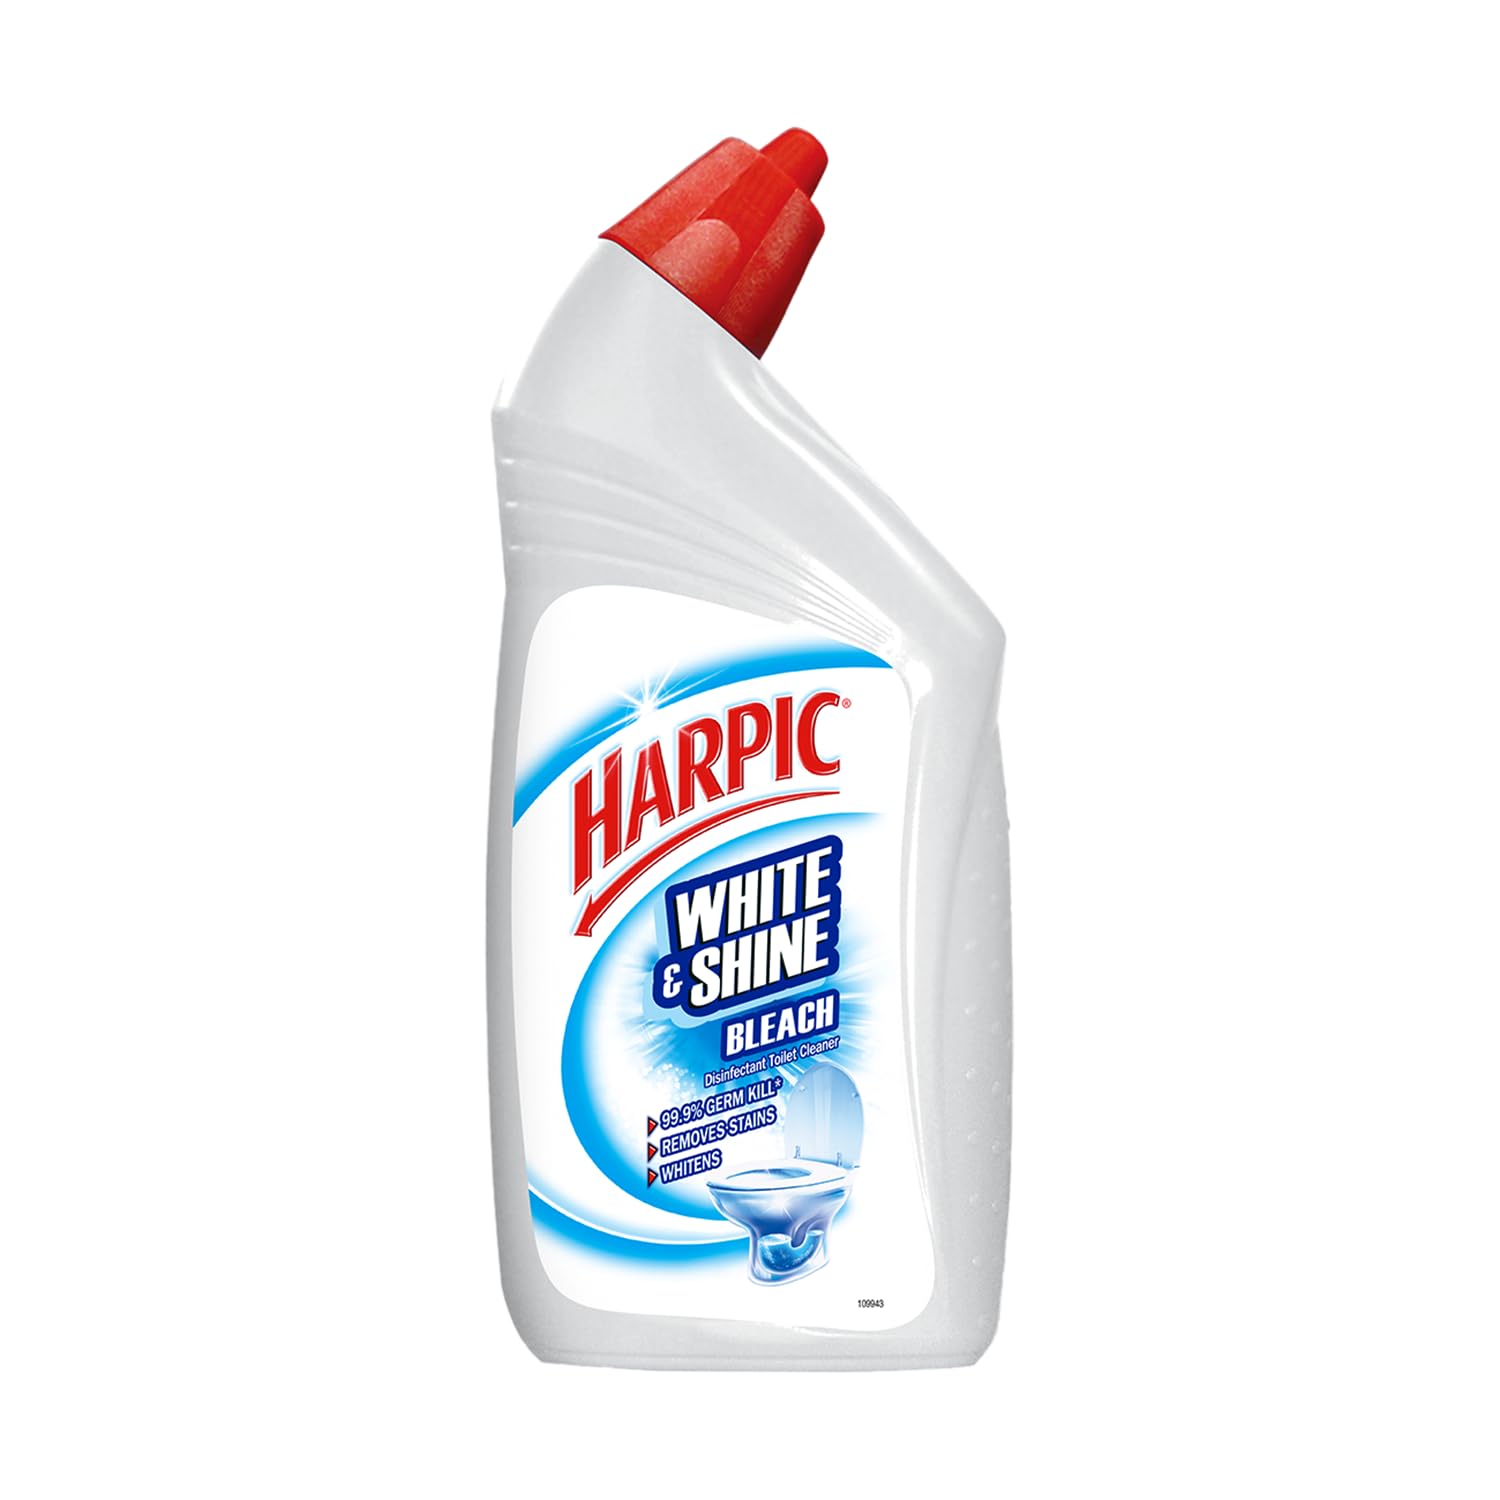 Harpic 500 ml - Bleach, White and Shine Disinfectant Toilet Cleaner Liquid